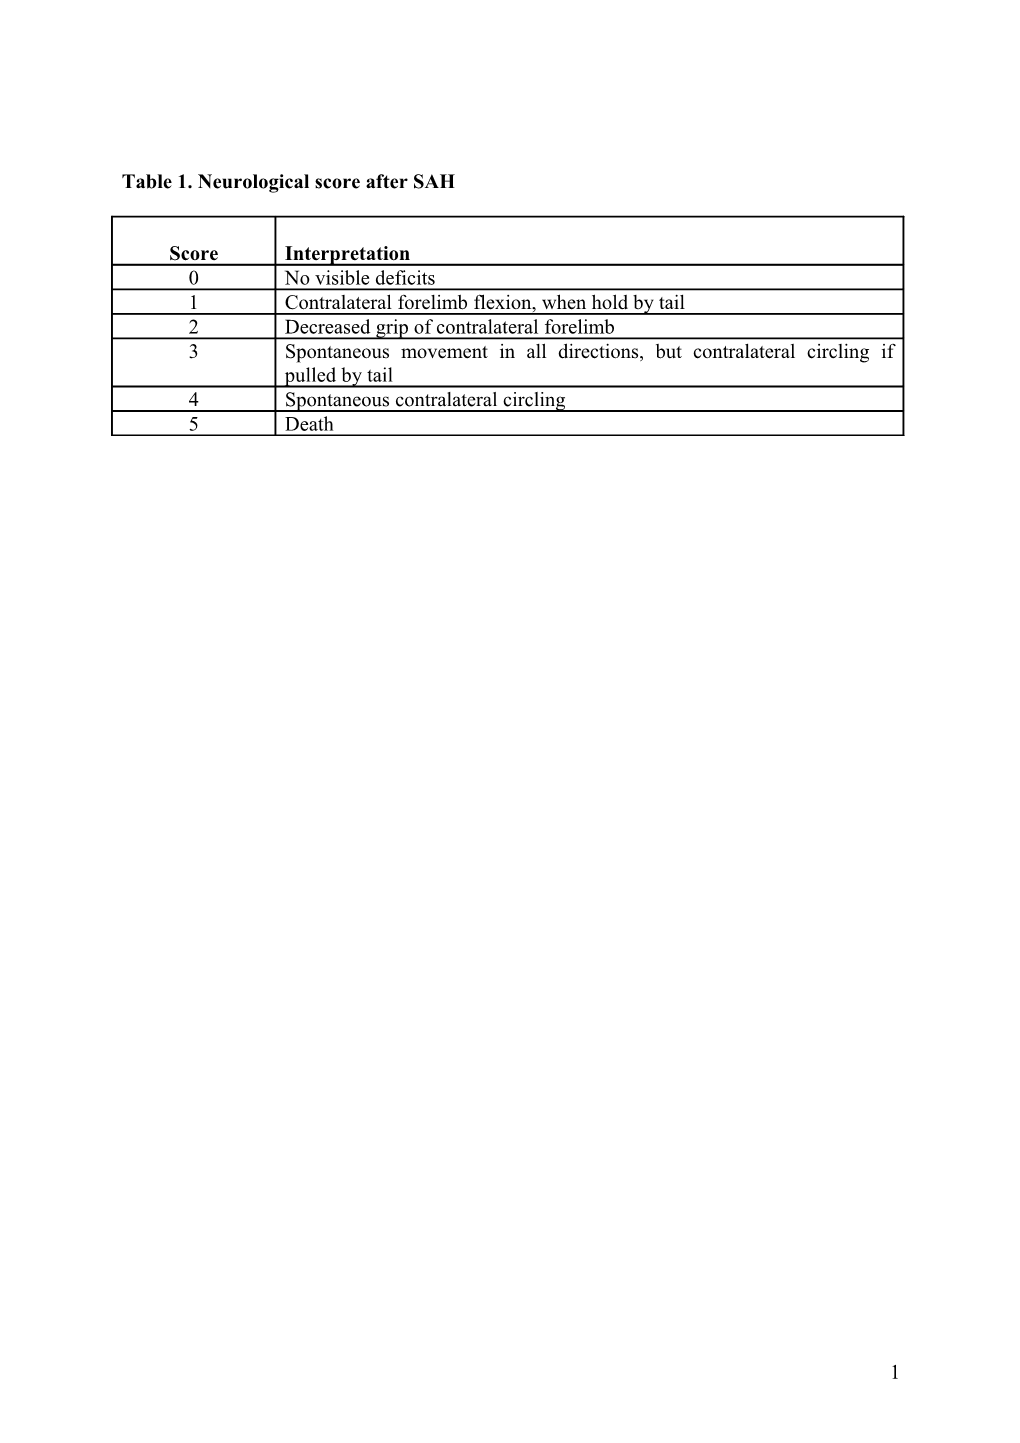 Table 1. Neurological Score After SAH